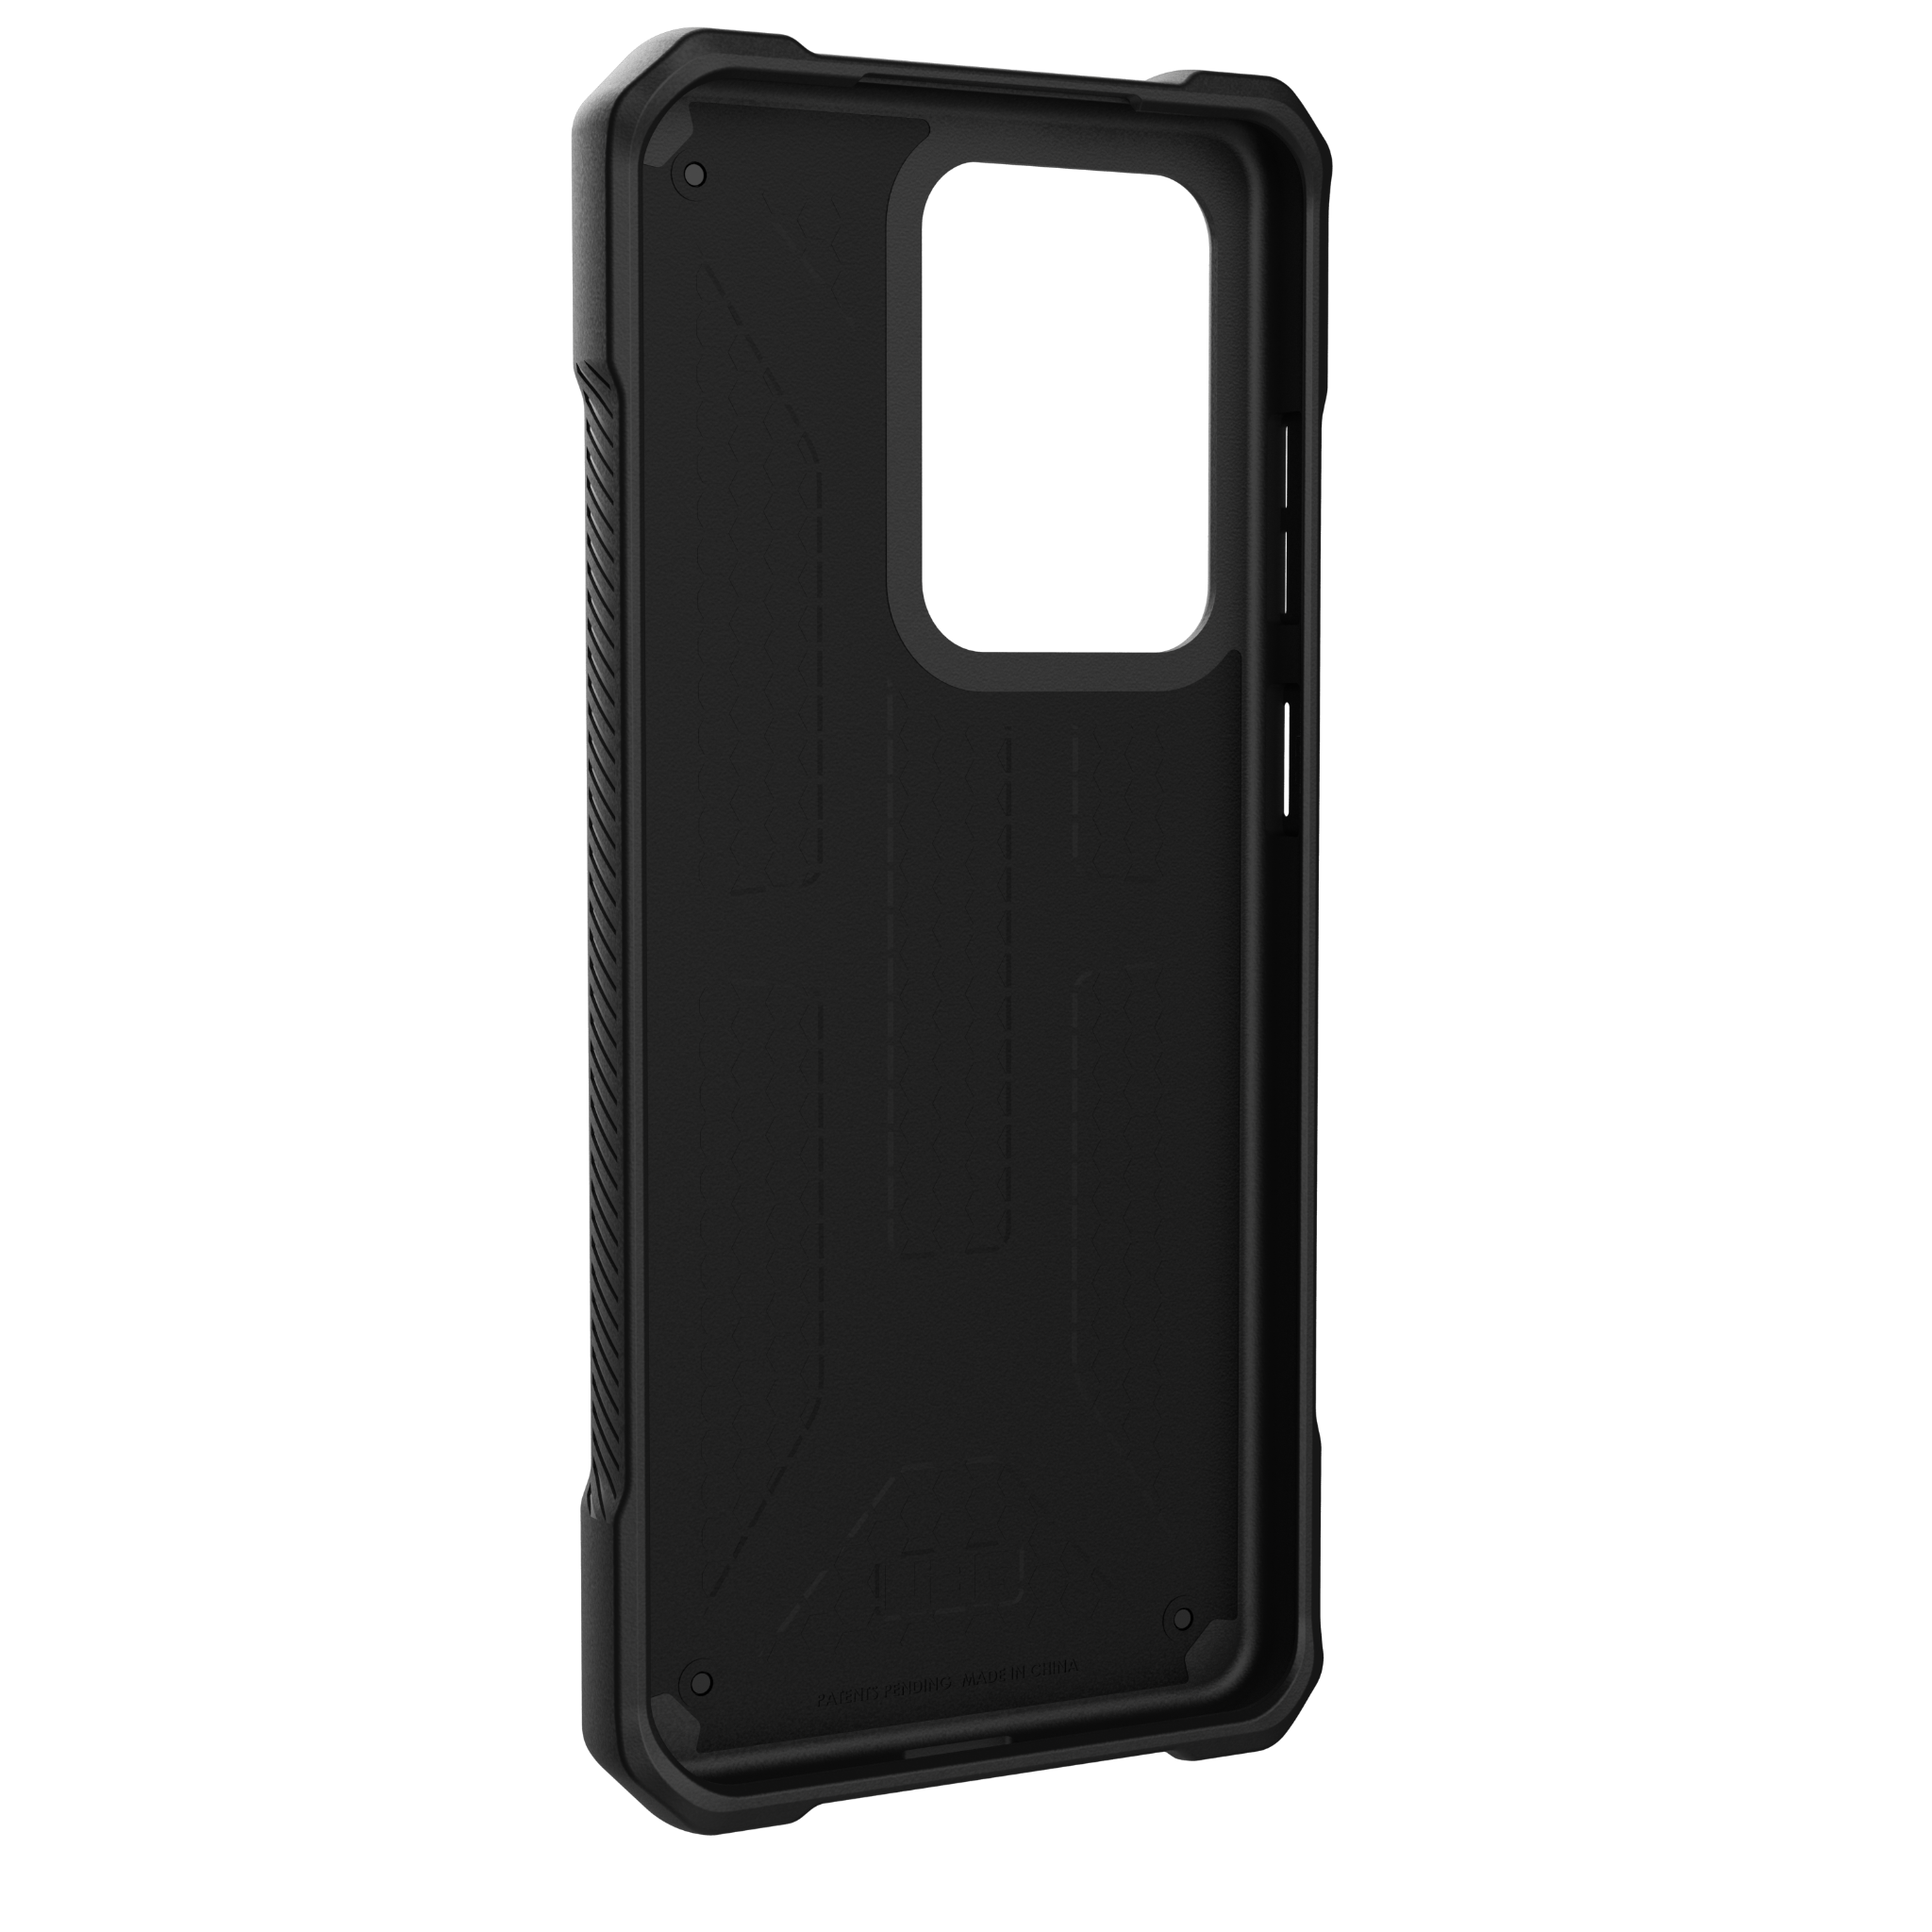  Ốp lưng Monarch cho Samsung Galaxy S20 Ultra [6.9-inch] 